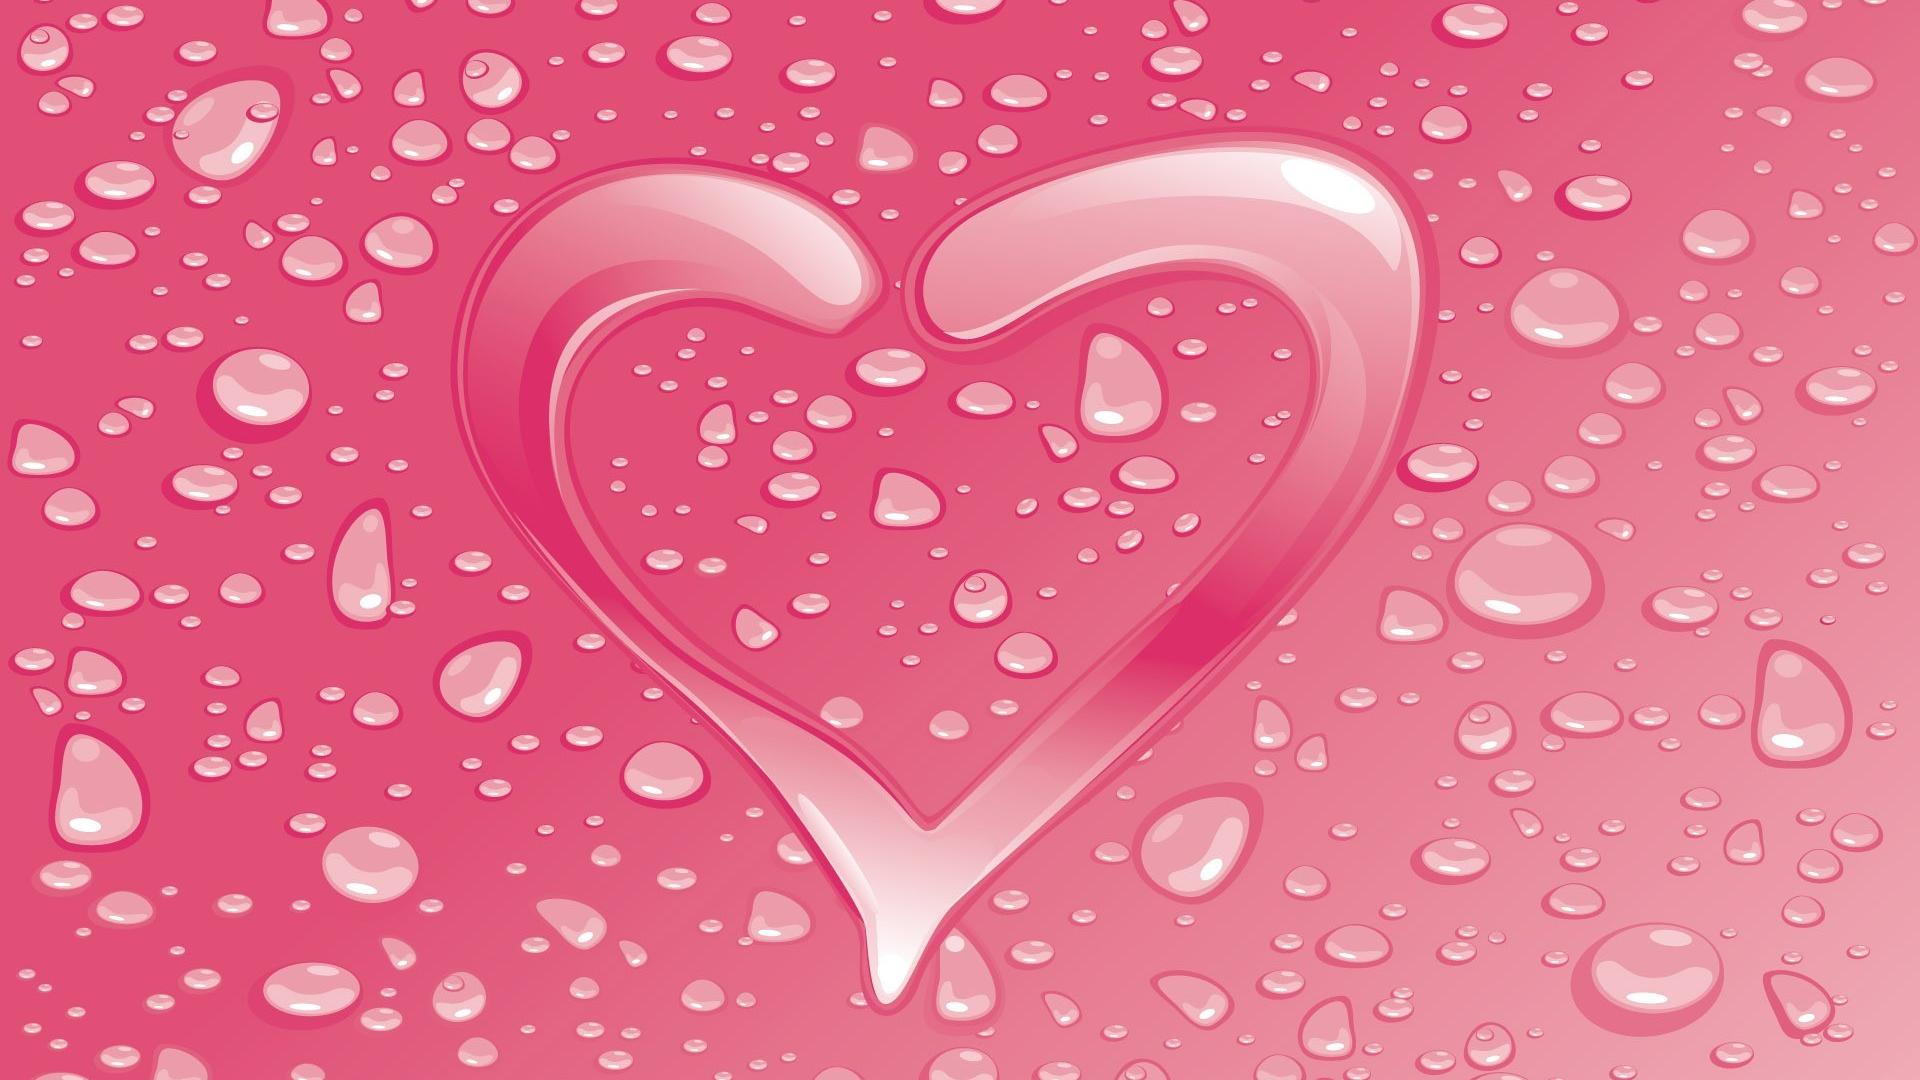 hd wallpaper valentines day love heart | wallpapers55.com - Best ...